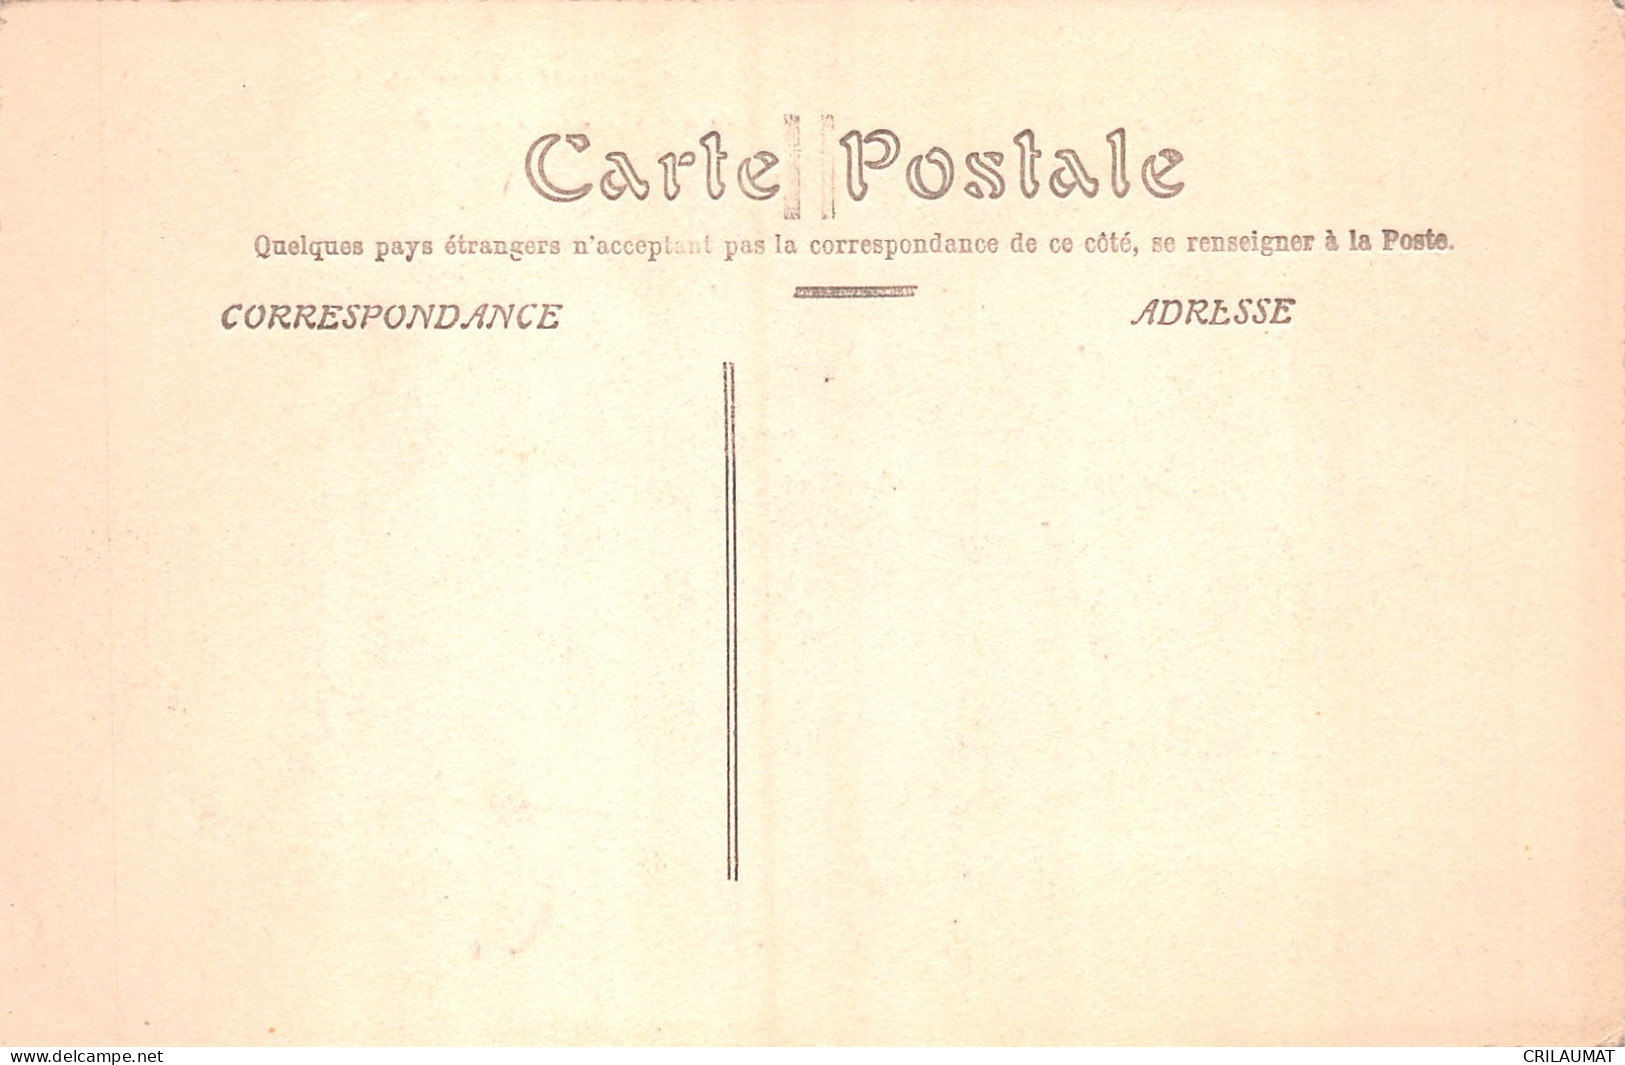 75-PARIS INONDATIONS 1910 GARE D ORSAY-N°T5168-C/0315 - Paris Flood, 1910